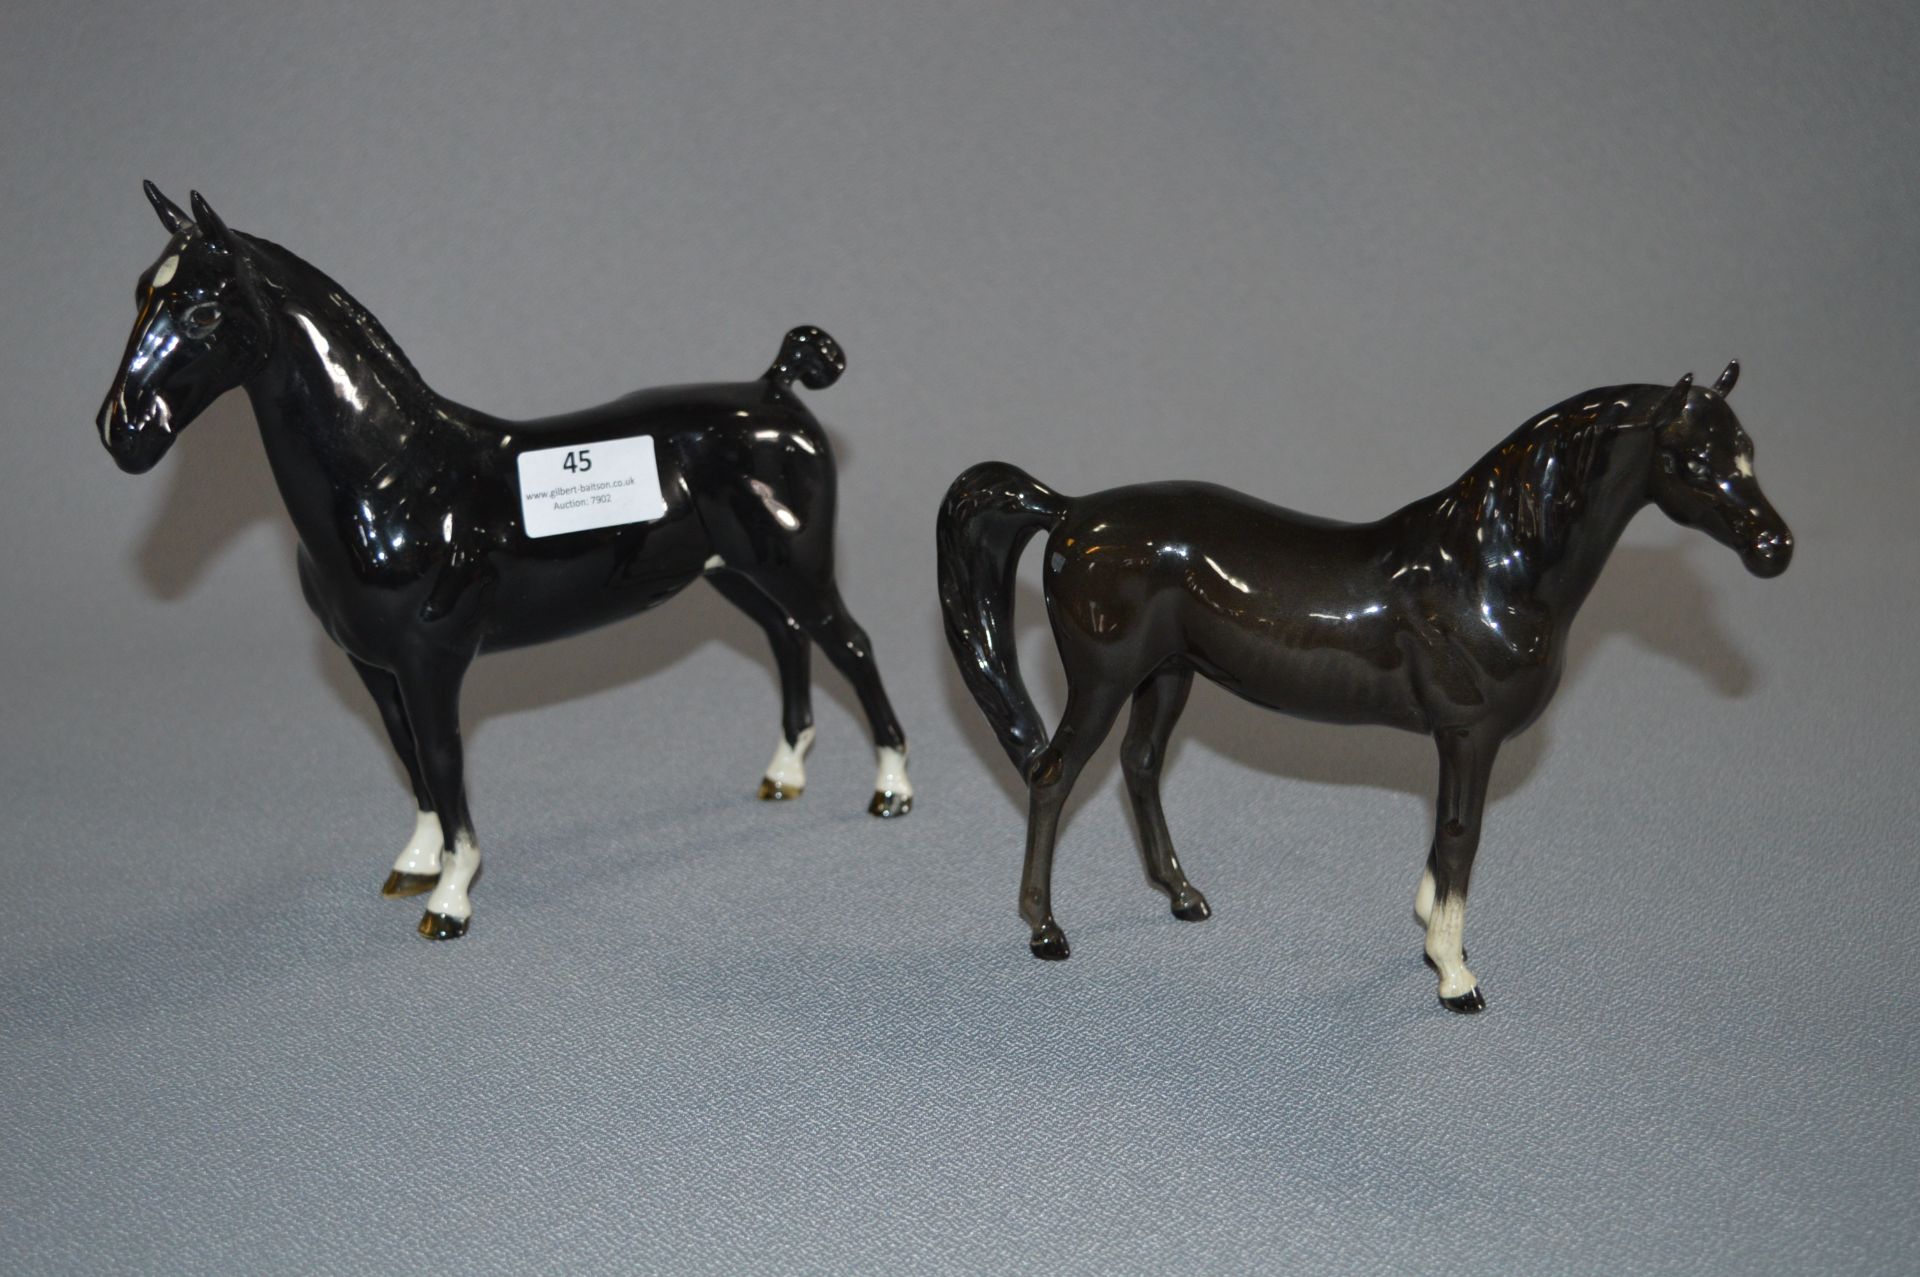 Two Beswick Figurines - Black Horses